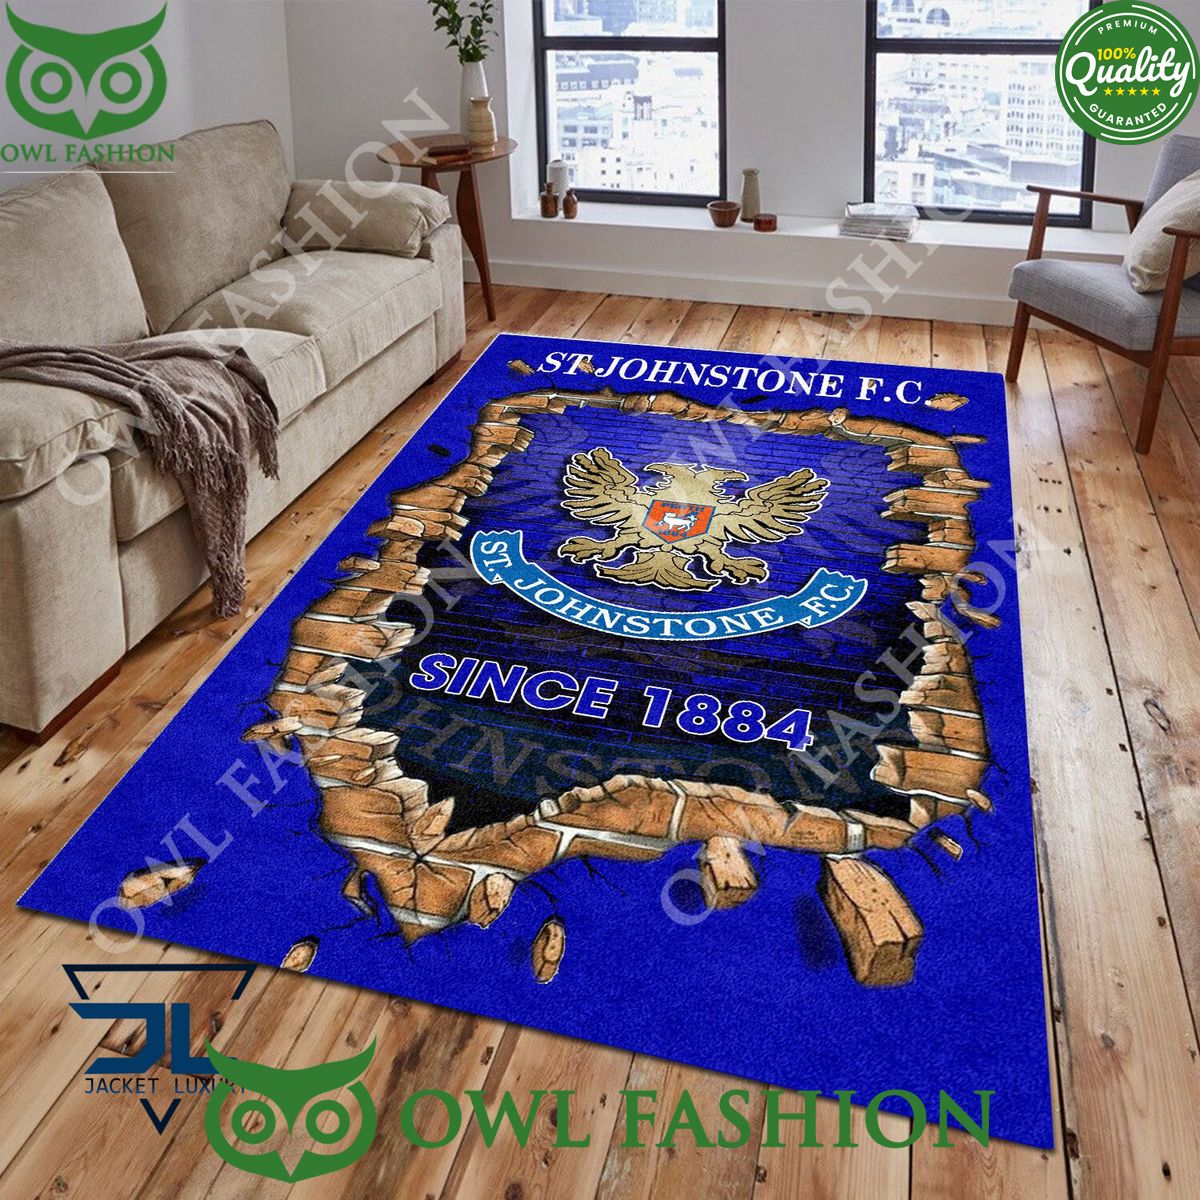 St Johnstone F.C. 1790 Scottish Broken Wall Living Room Carpet Loving click